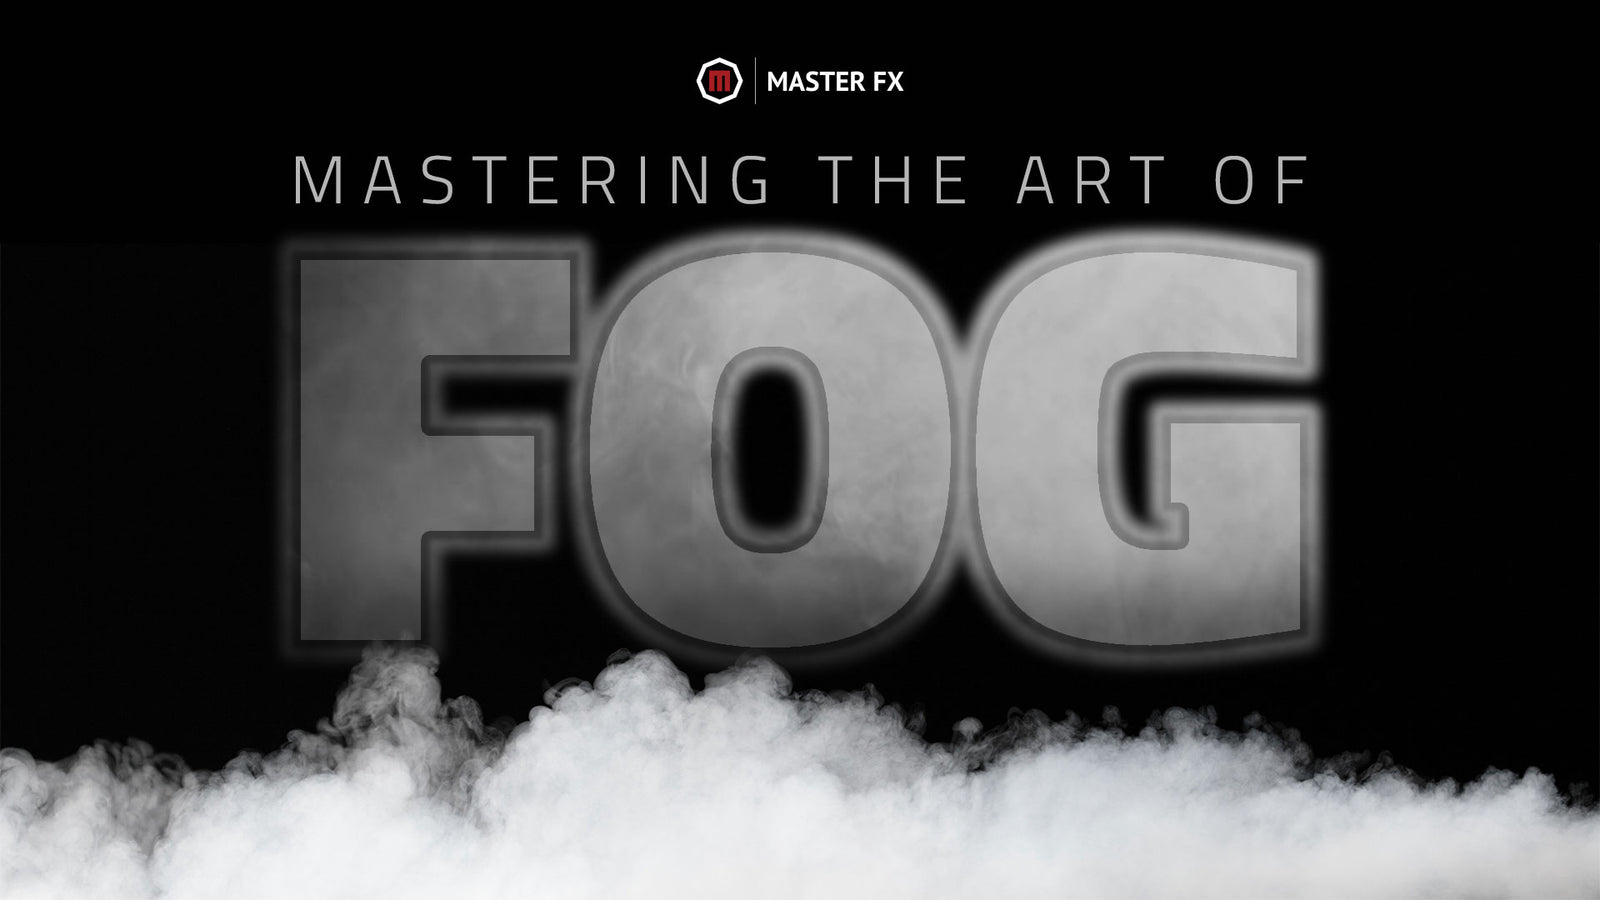 Mastering the Art of Fog